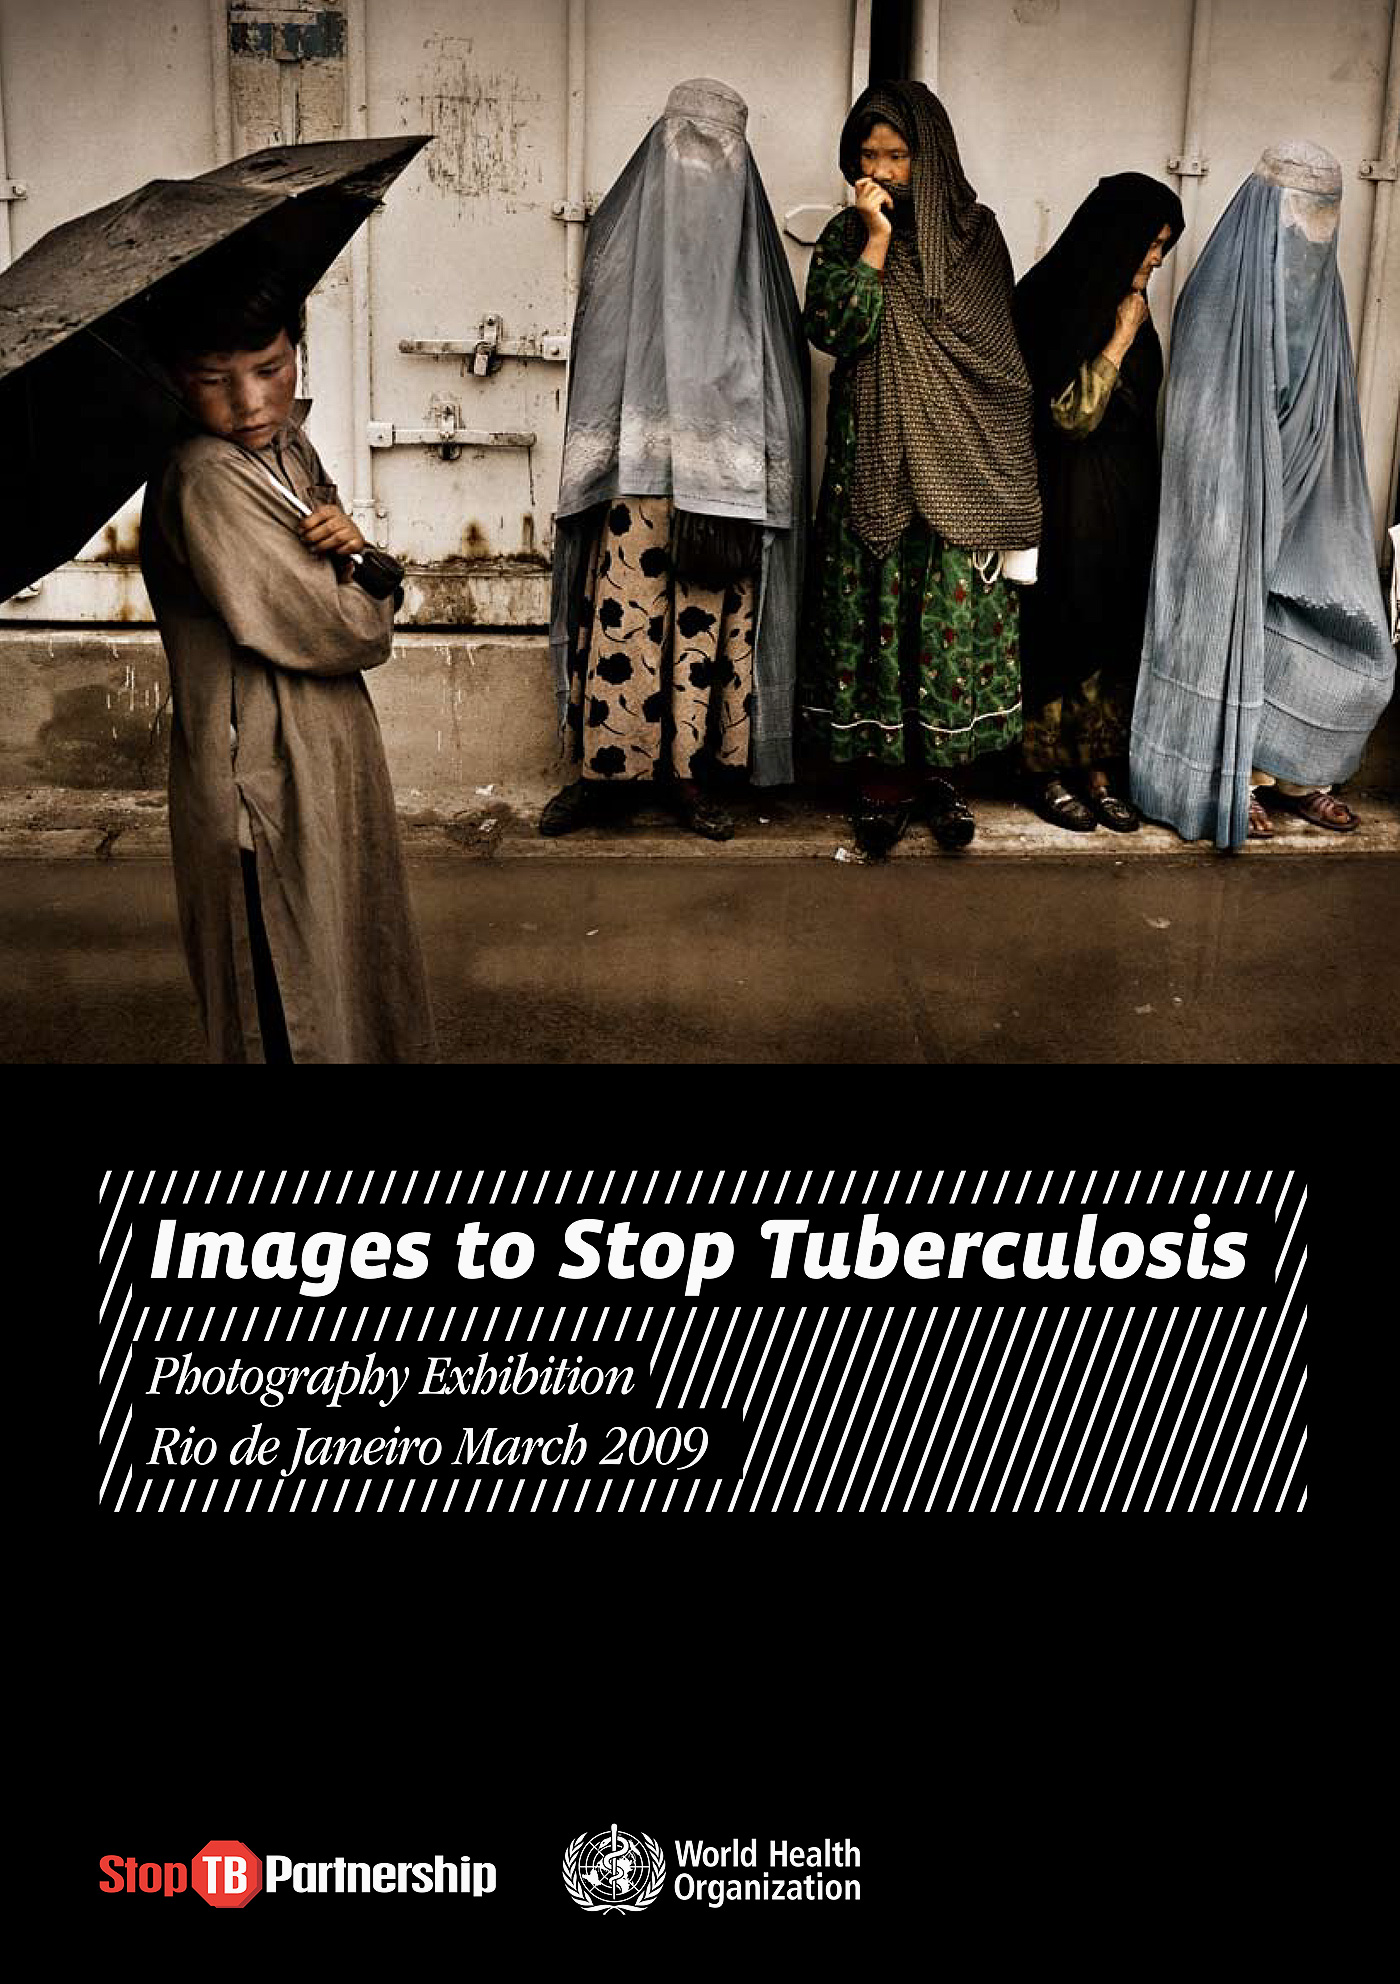 Catalogo per mostra fotografica Images to stop tuberculosis